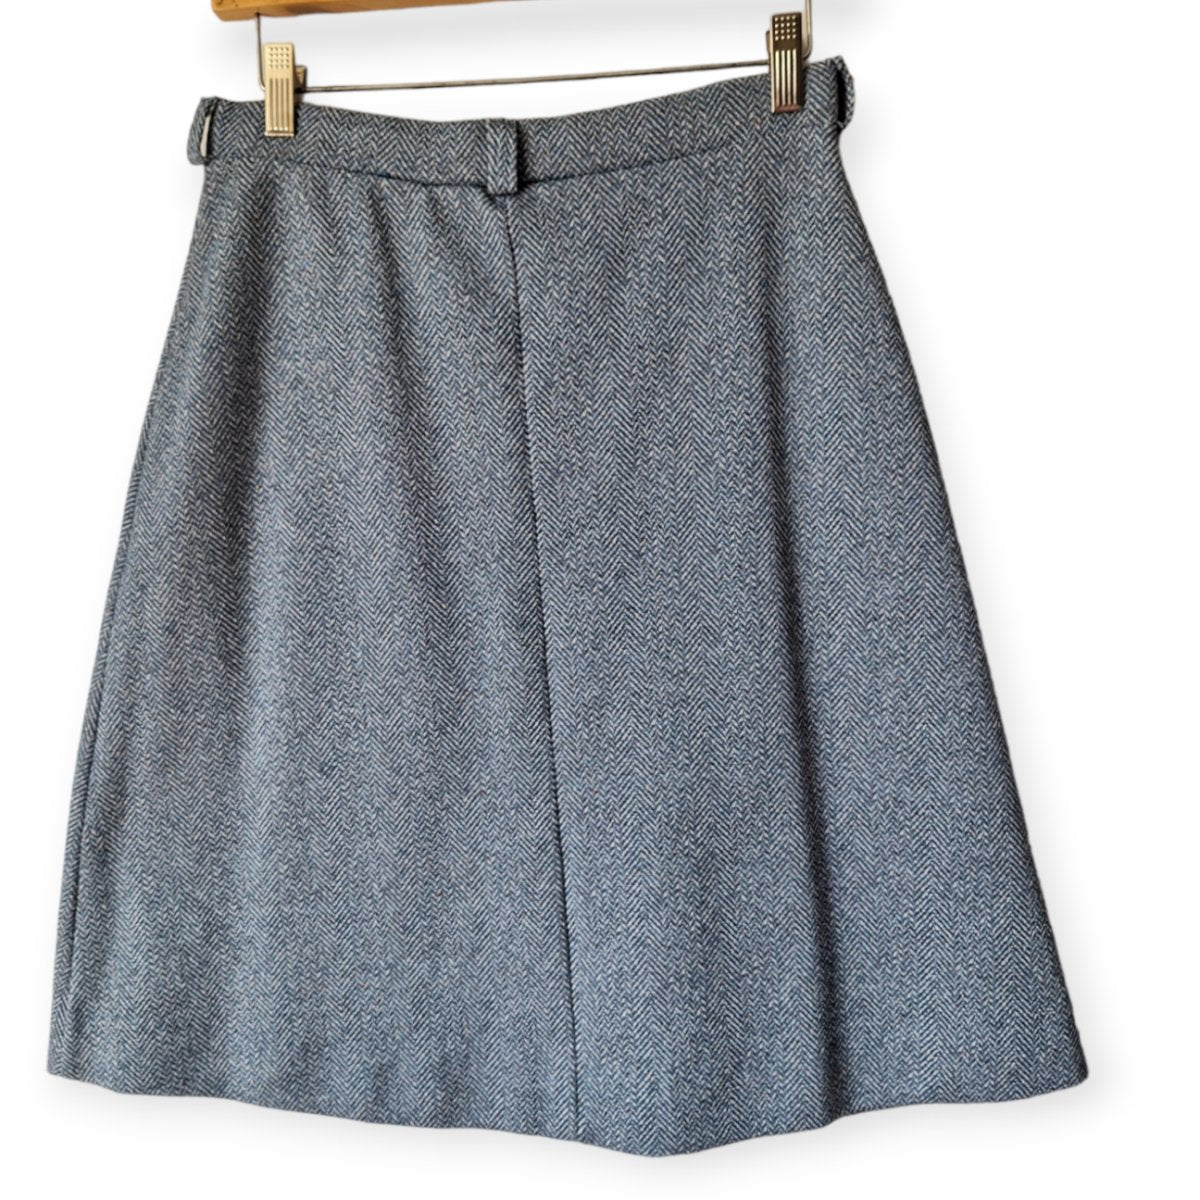 70s High Waist A Line Herringbone Skirt Medium waist 28" to 30" - themallvintage The Mall Vintage